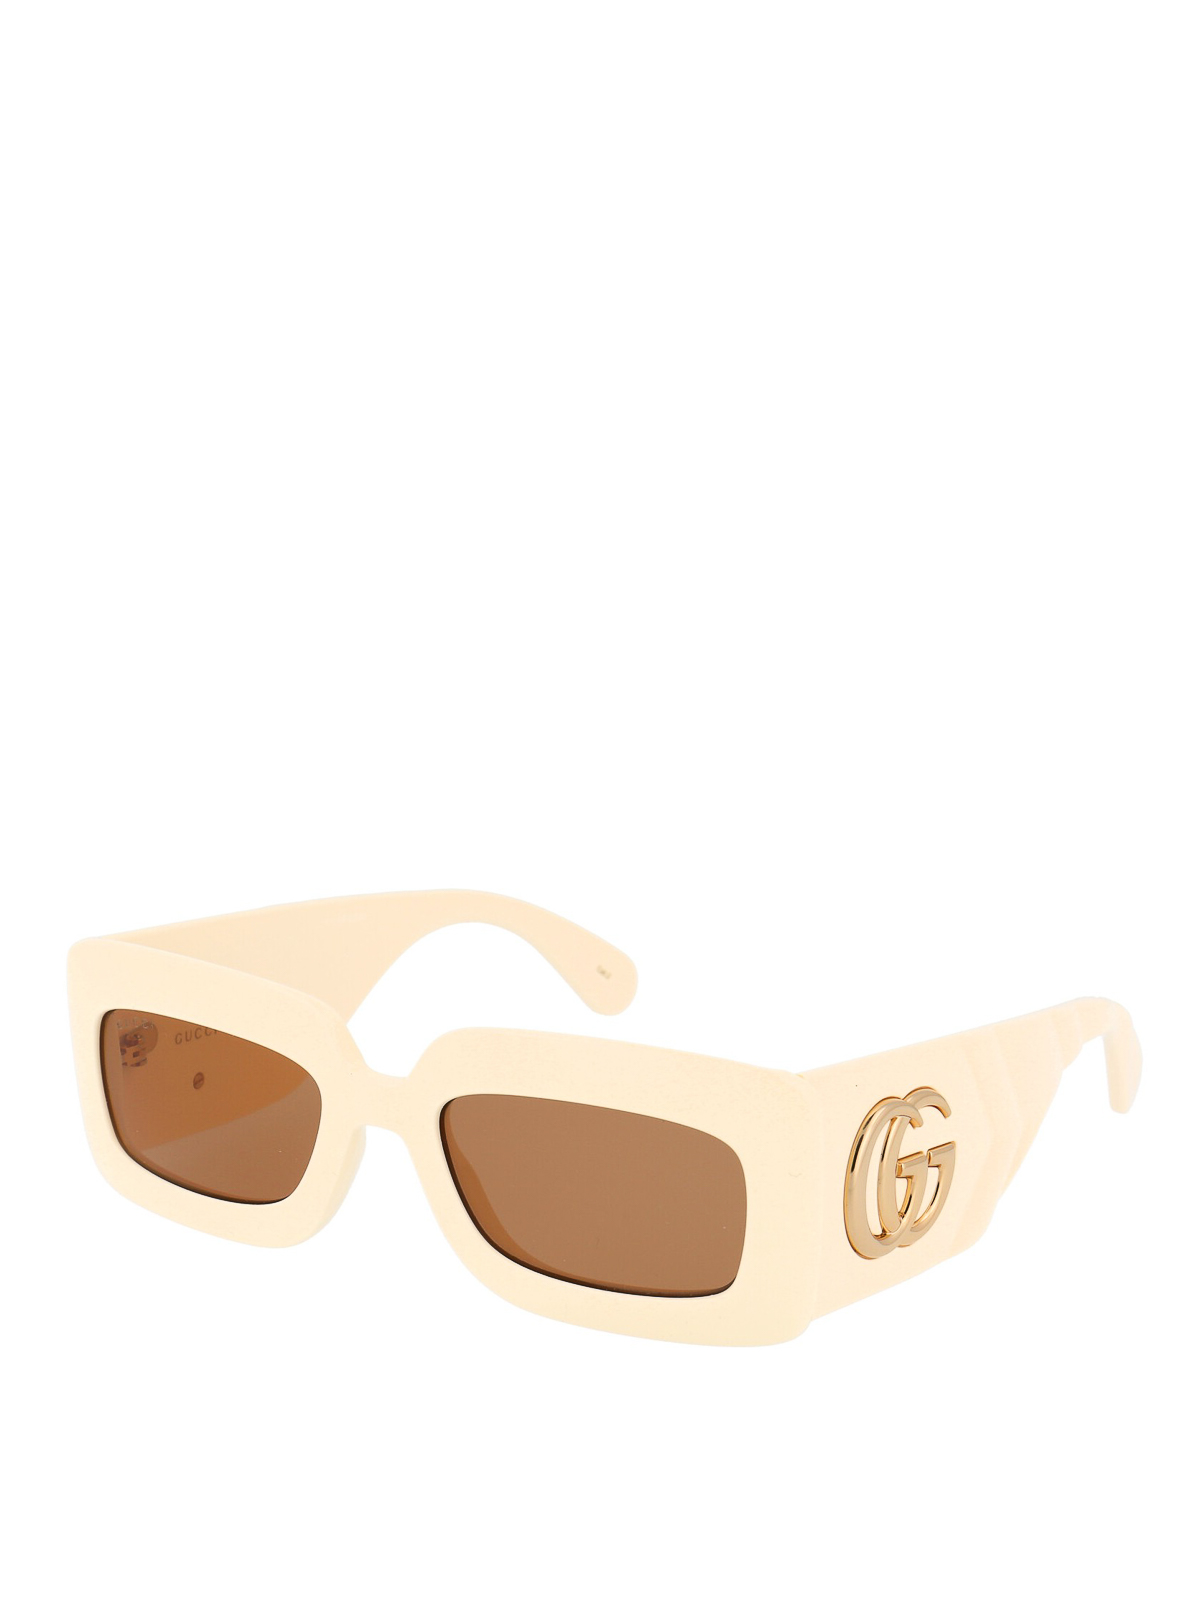 Sunglasses Gucci - Square sunglasses - GG0811S002 | Shop online at iKRIX